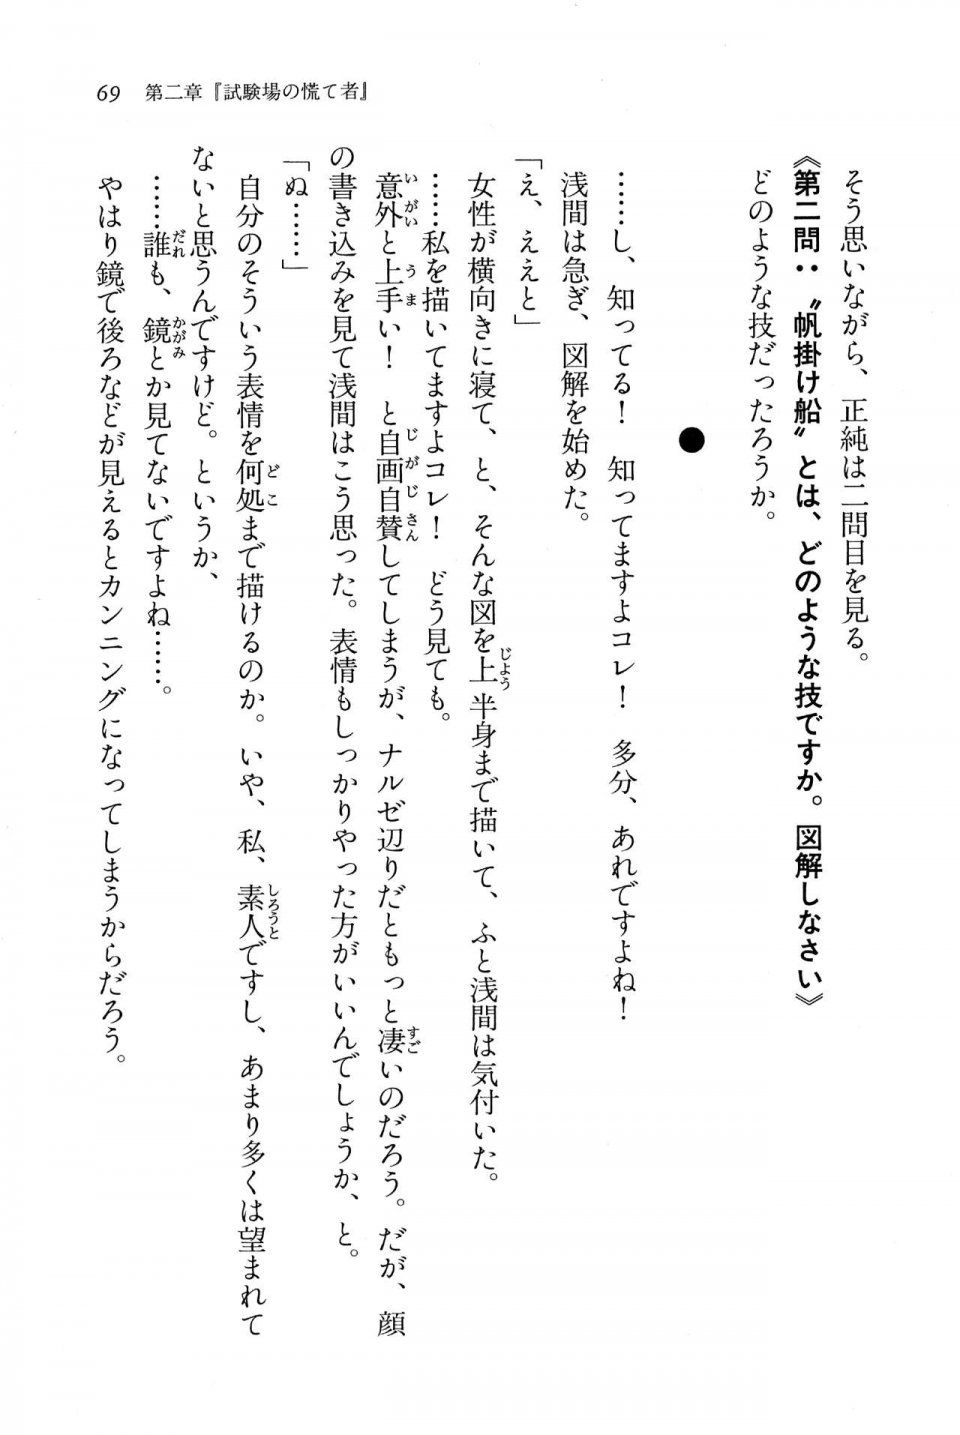 Kyoukai Senjou no Horizon BD Special Mininovel Vol 7(4A) - Photo #73